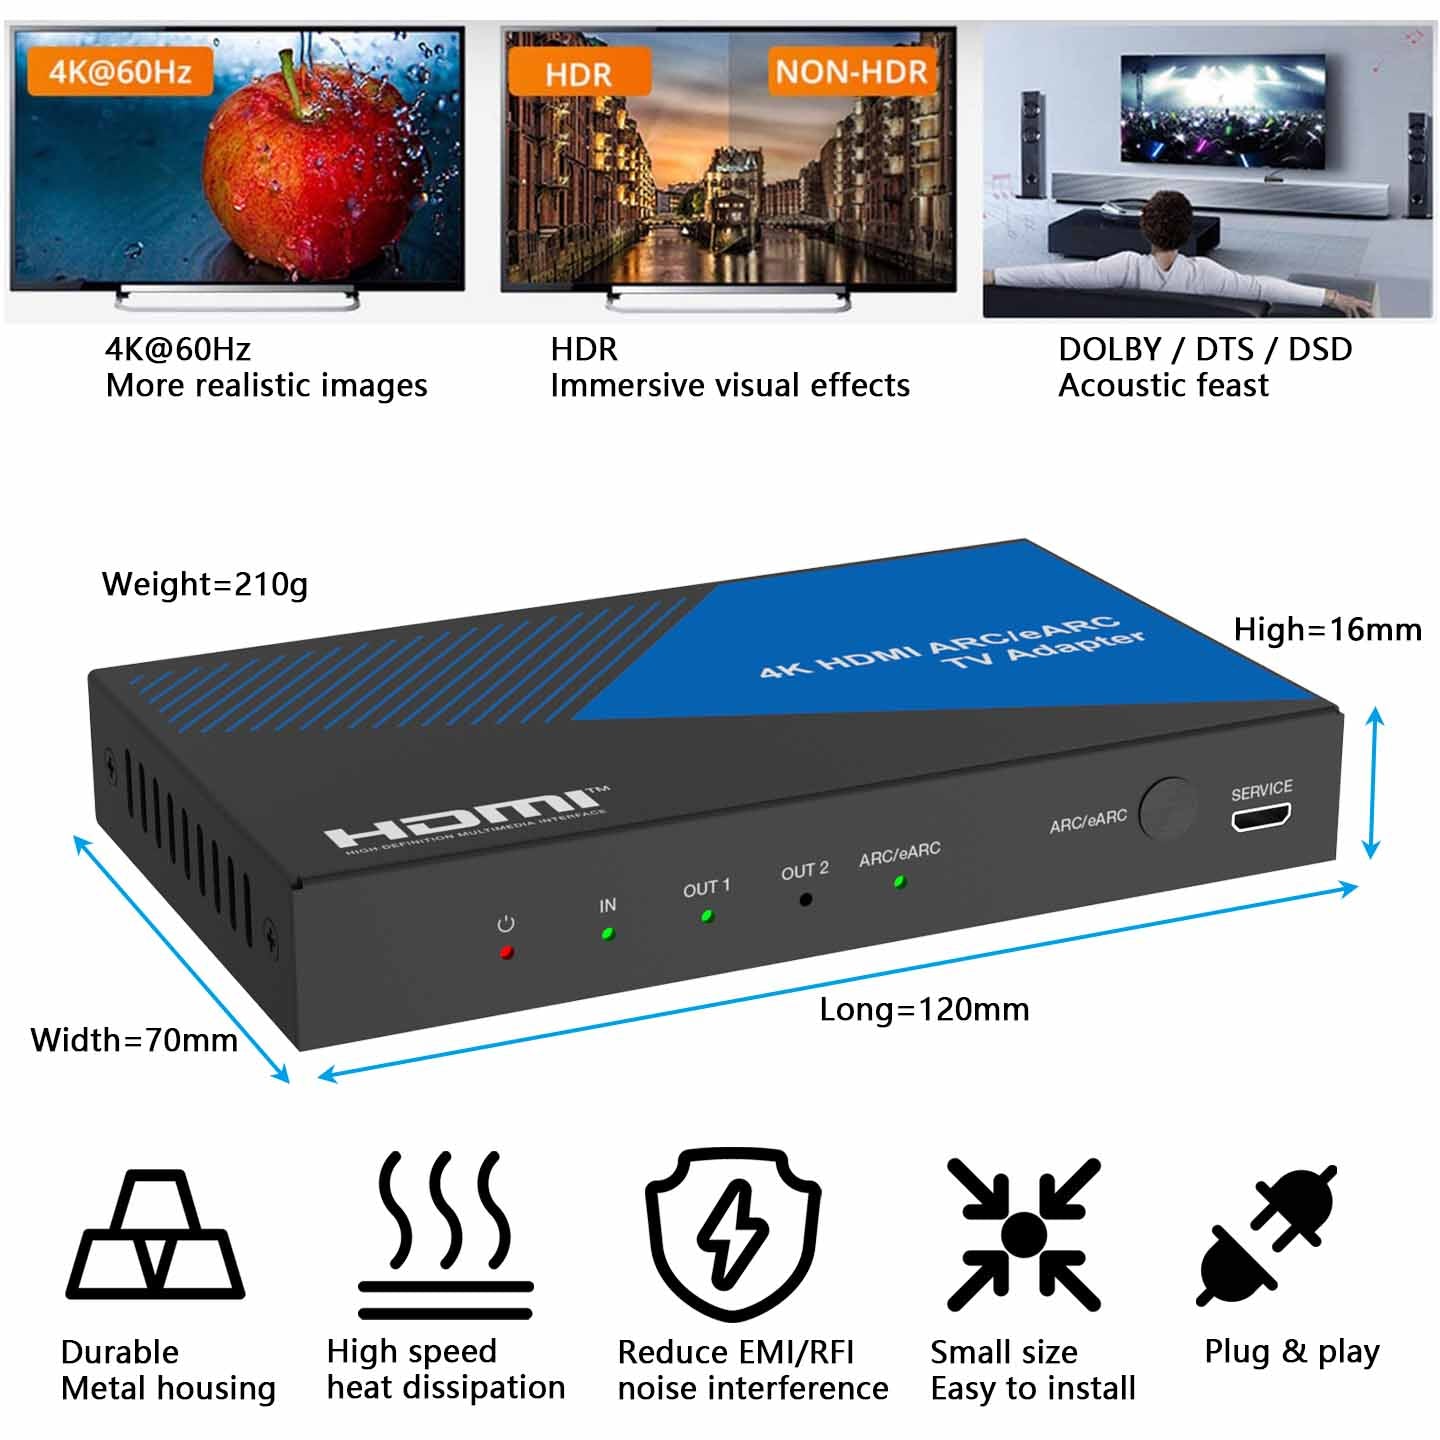 HDMI ARC/eARC Audio Adapter Converter size